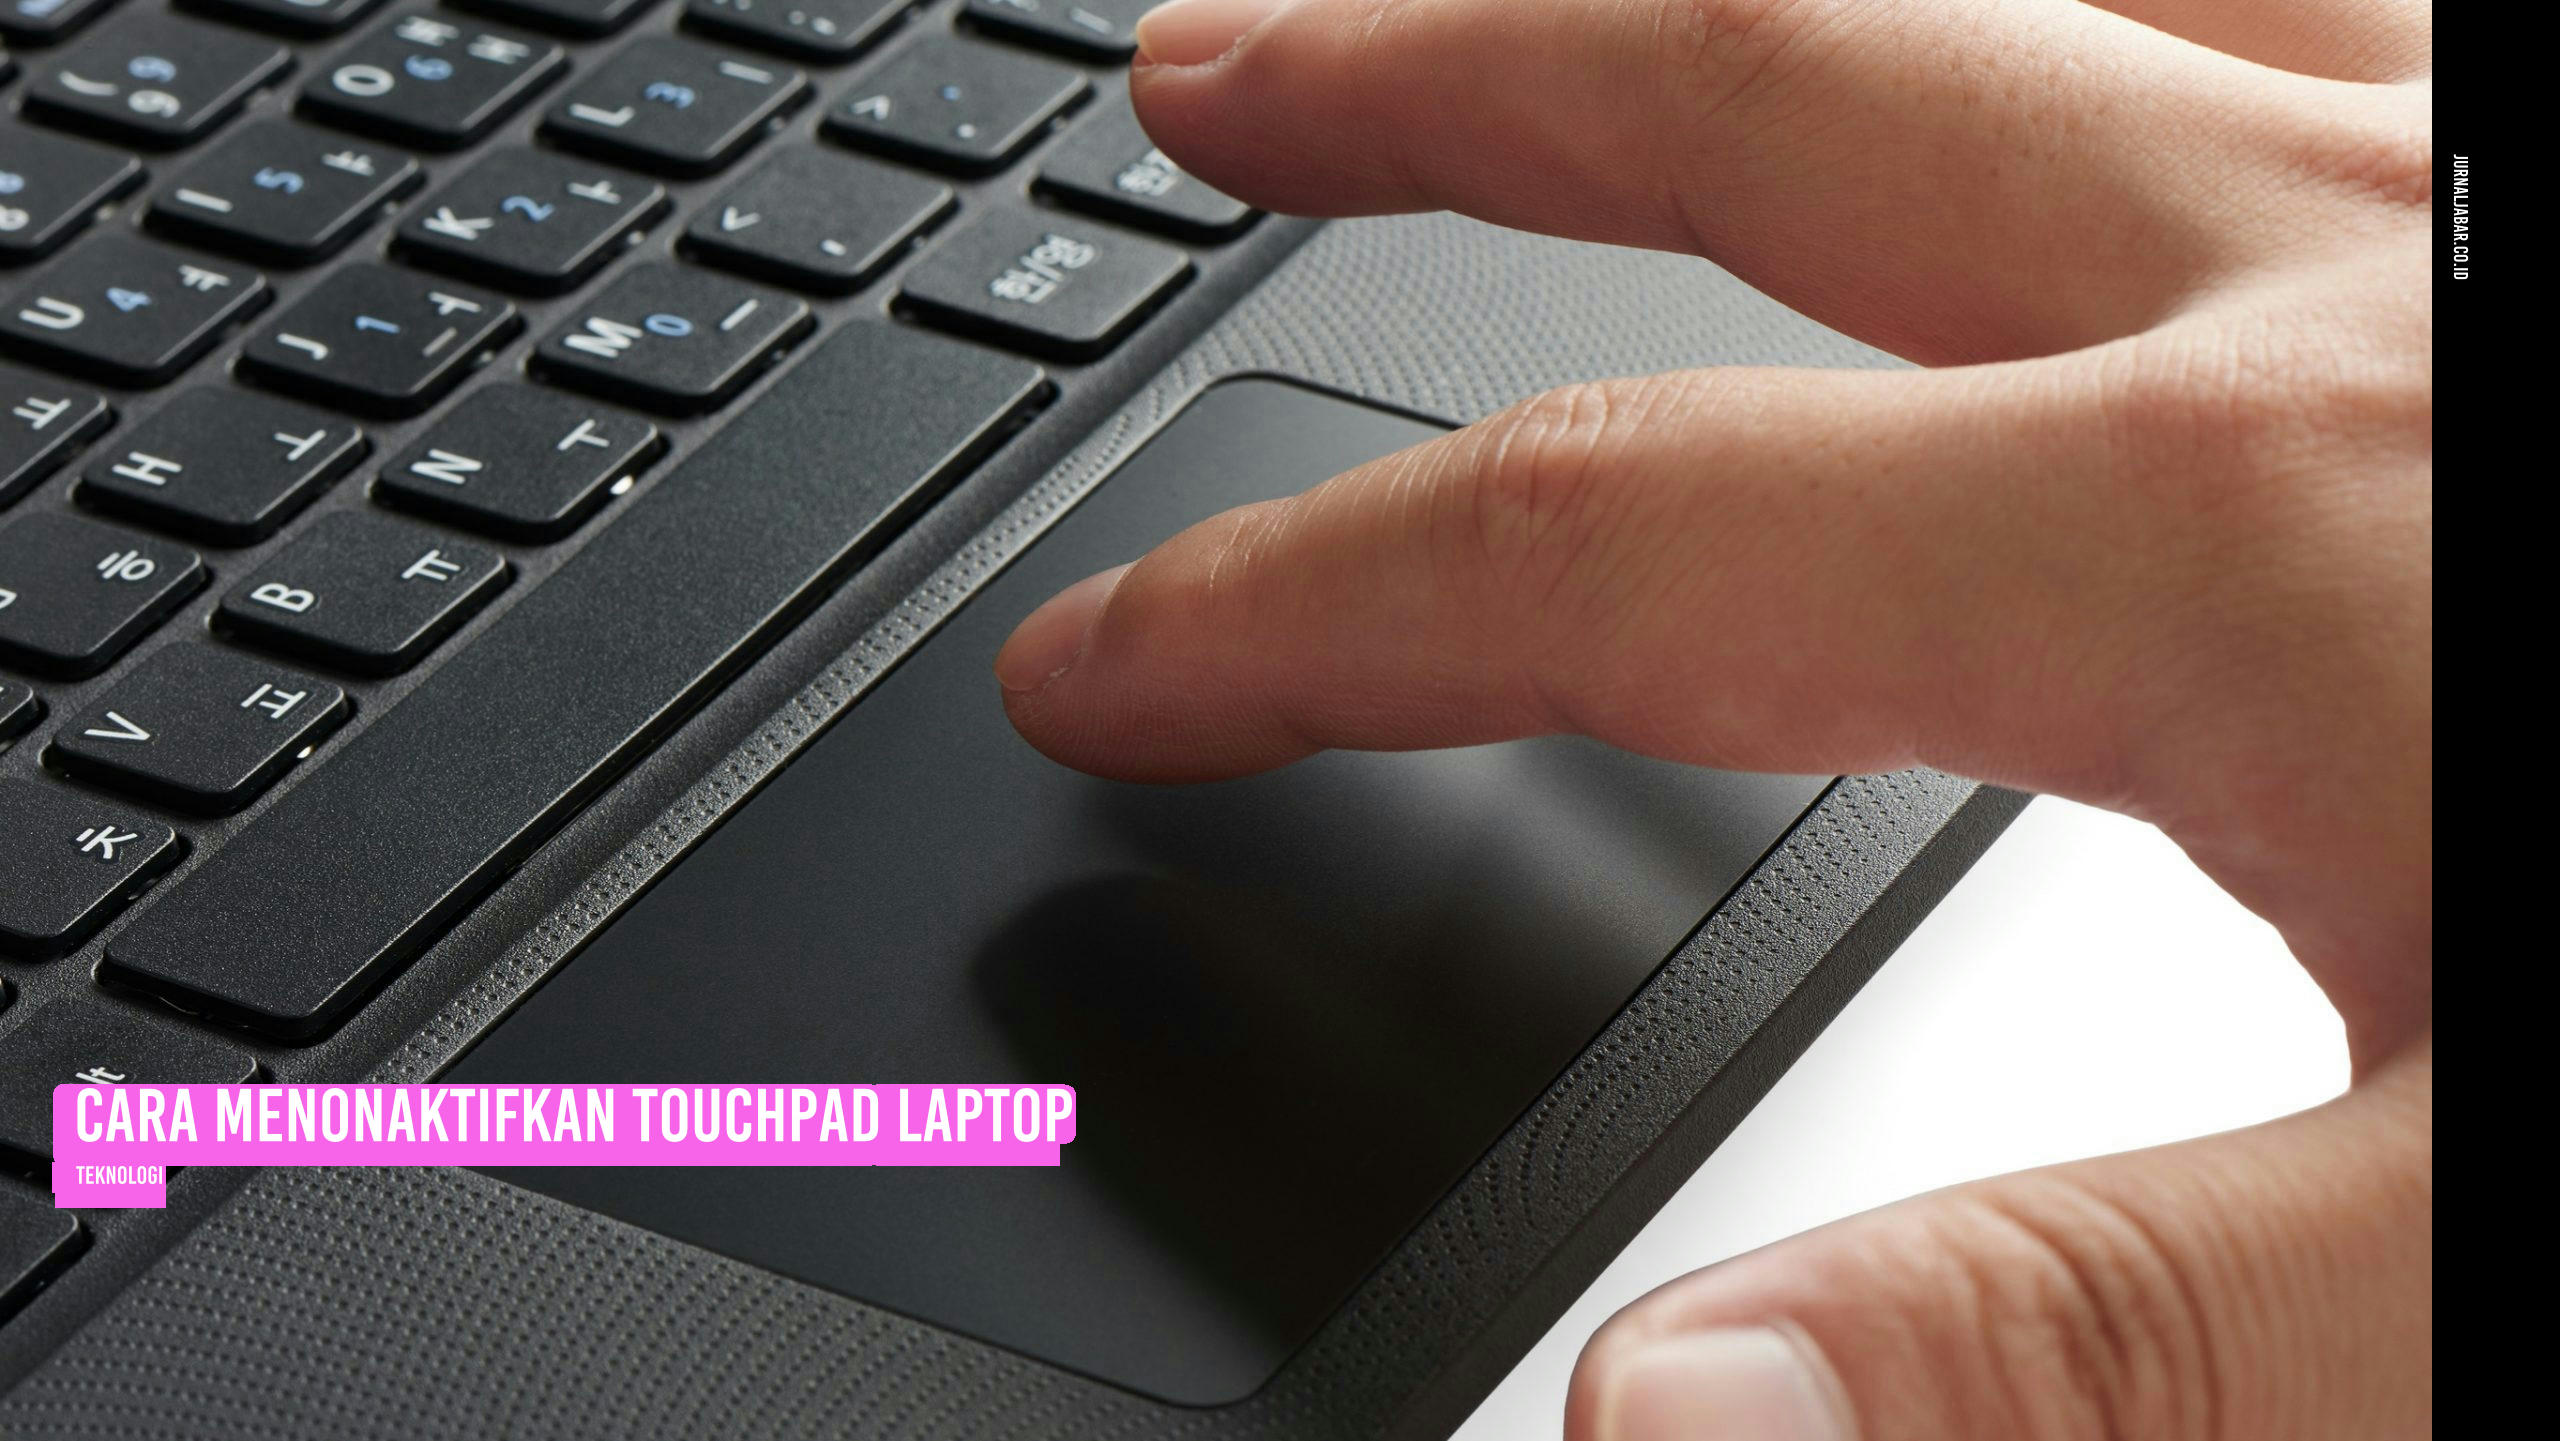 Cara Menonaktifkan Touchpad Laptop